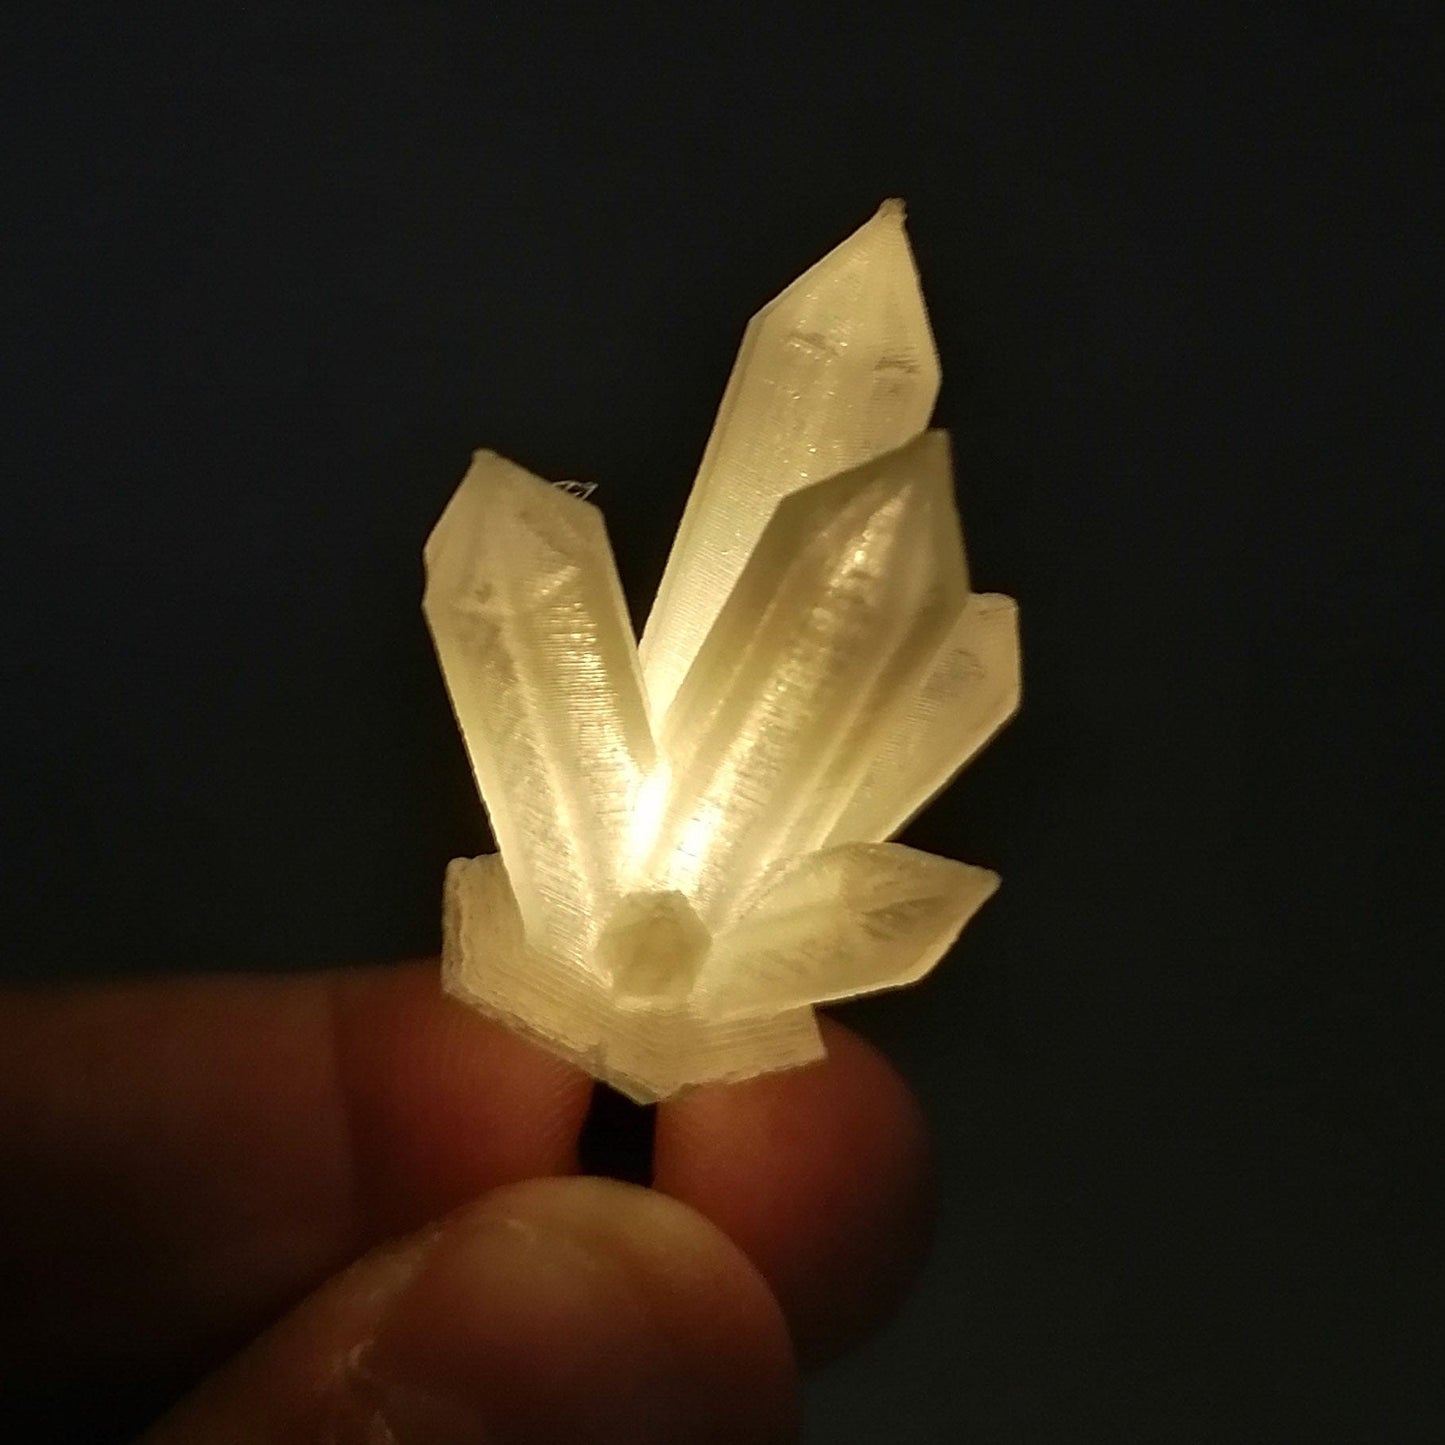 Diorama en miniatura con iluminación de cristal de bruja